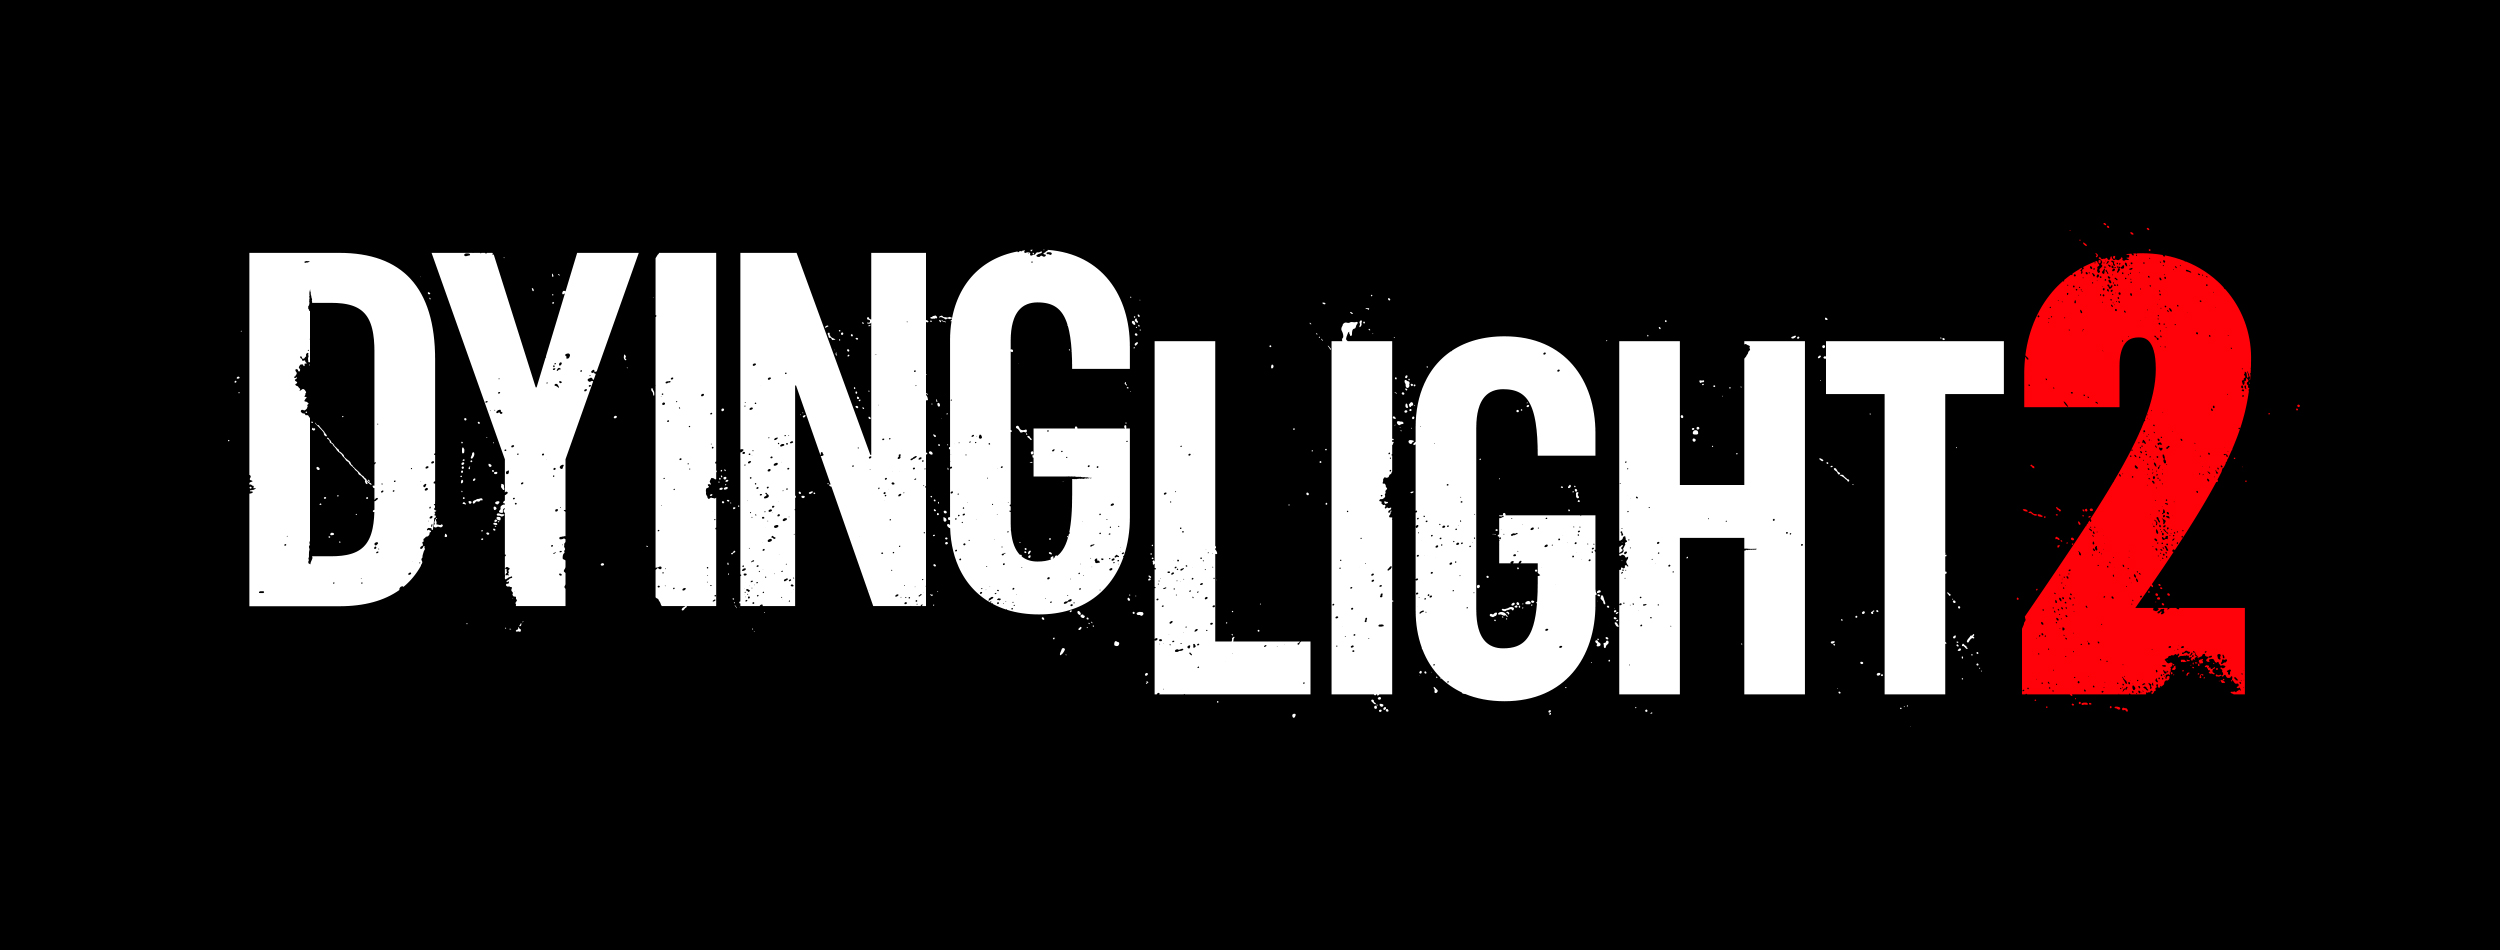 Dying Light 2 логотип. Dying Light 2 надпись. Значок дайн Лайт 2. Dying Light 2 значок. Stay human 1